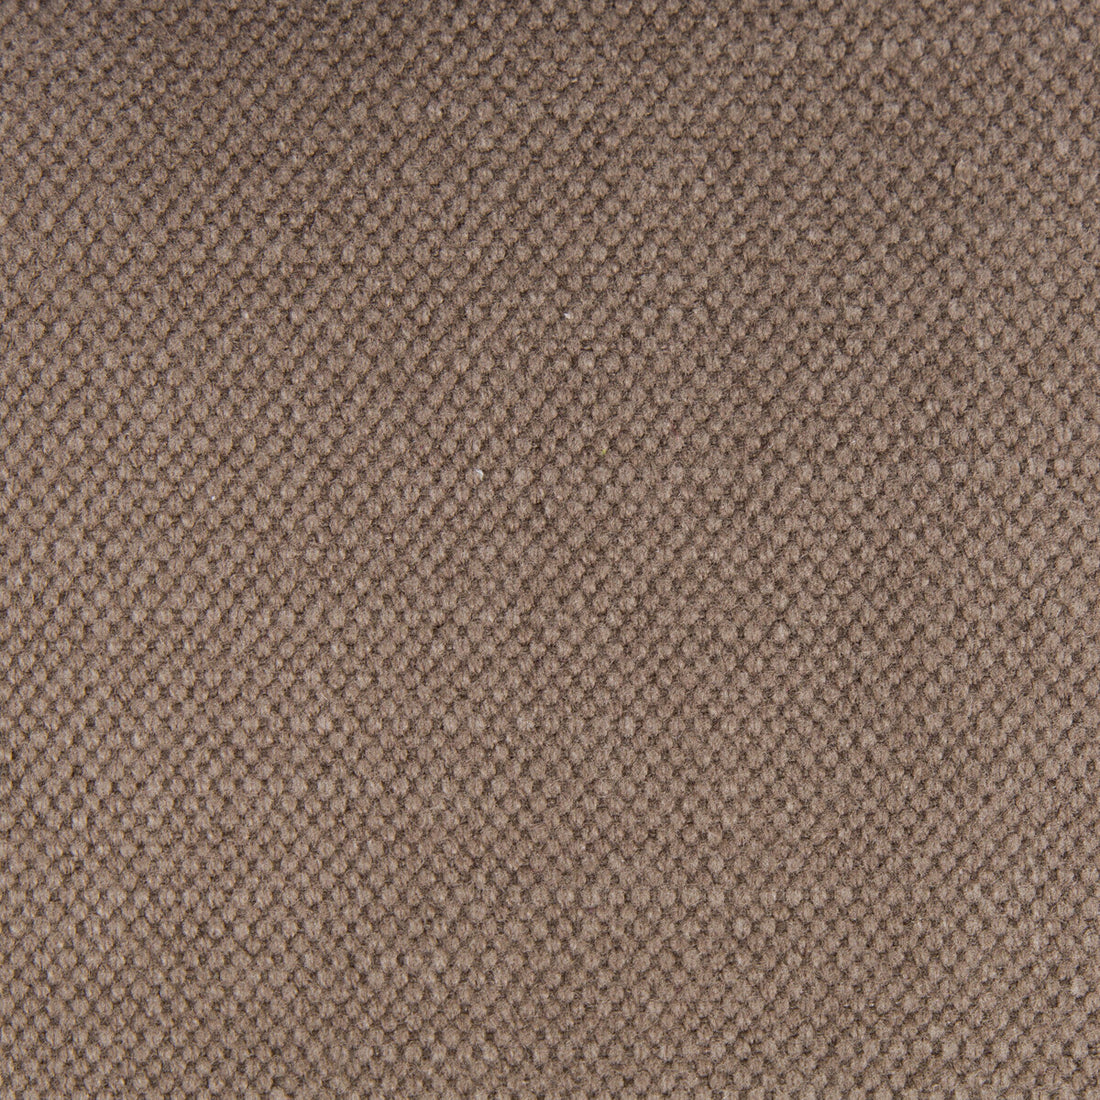 Lima fabric in marron color - pattern GDT5616.038.0 - by Gaston y Daniela in the Gaston Nuevo Mundo collection